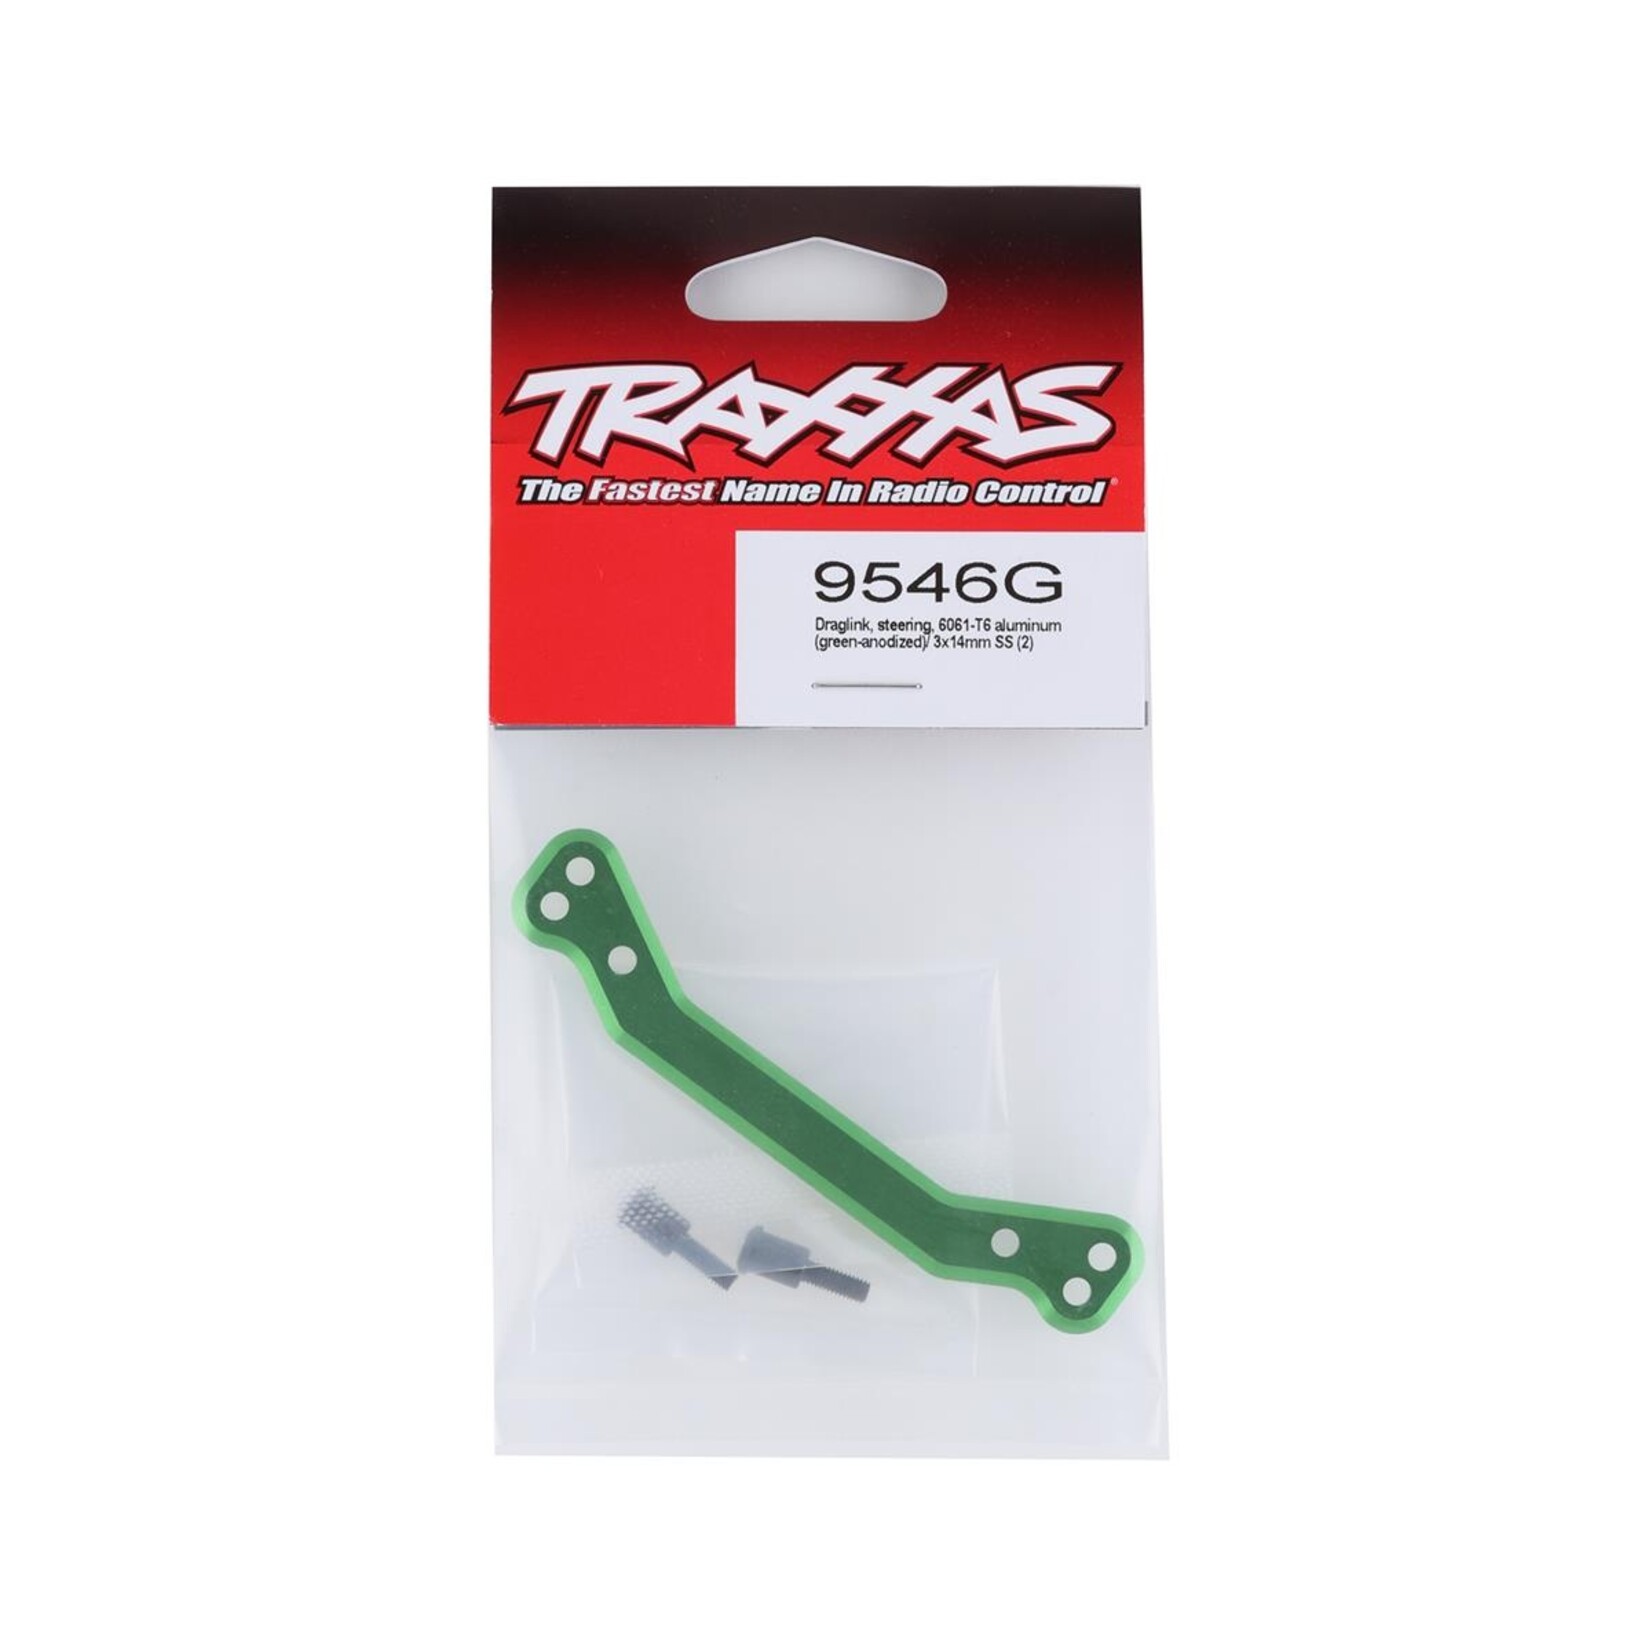 Traxxas Traxxas Sledge Aluminum Steering Draglink (Green) #9546G